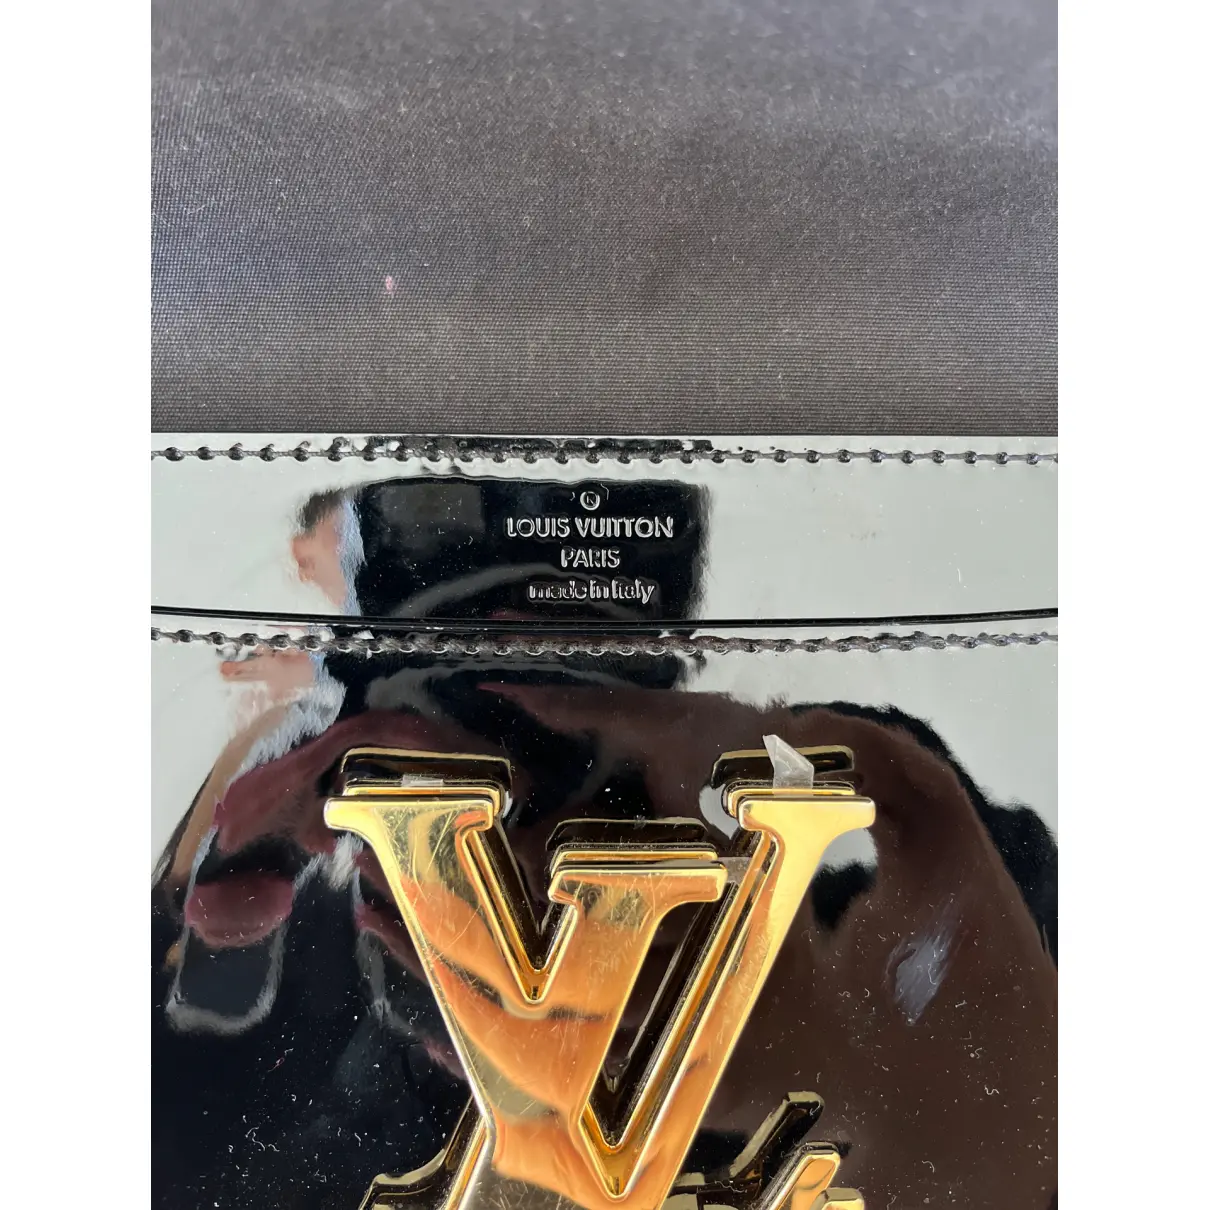 Buy Louis Vuitton Louise patent leather clutch bag online